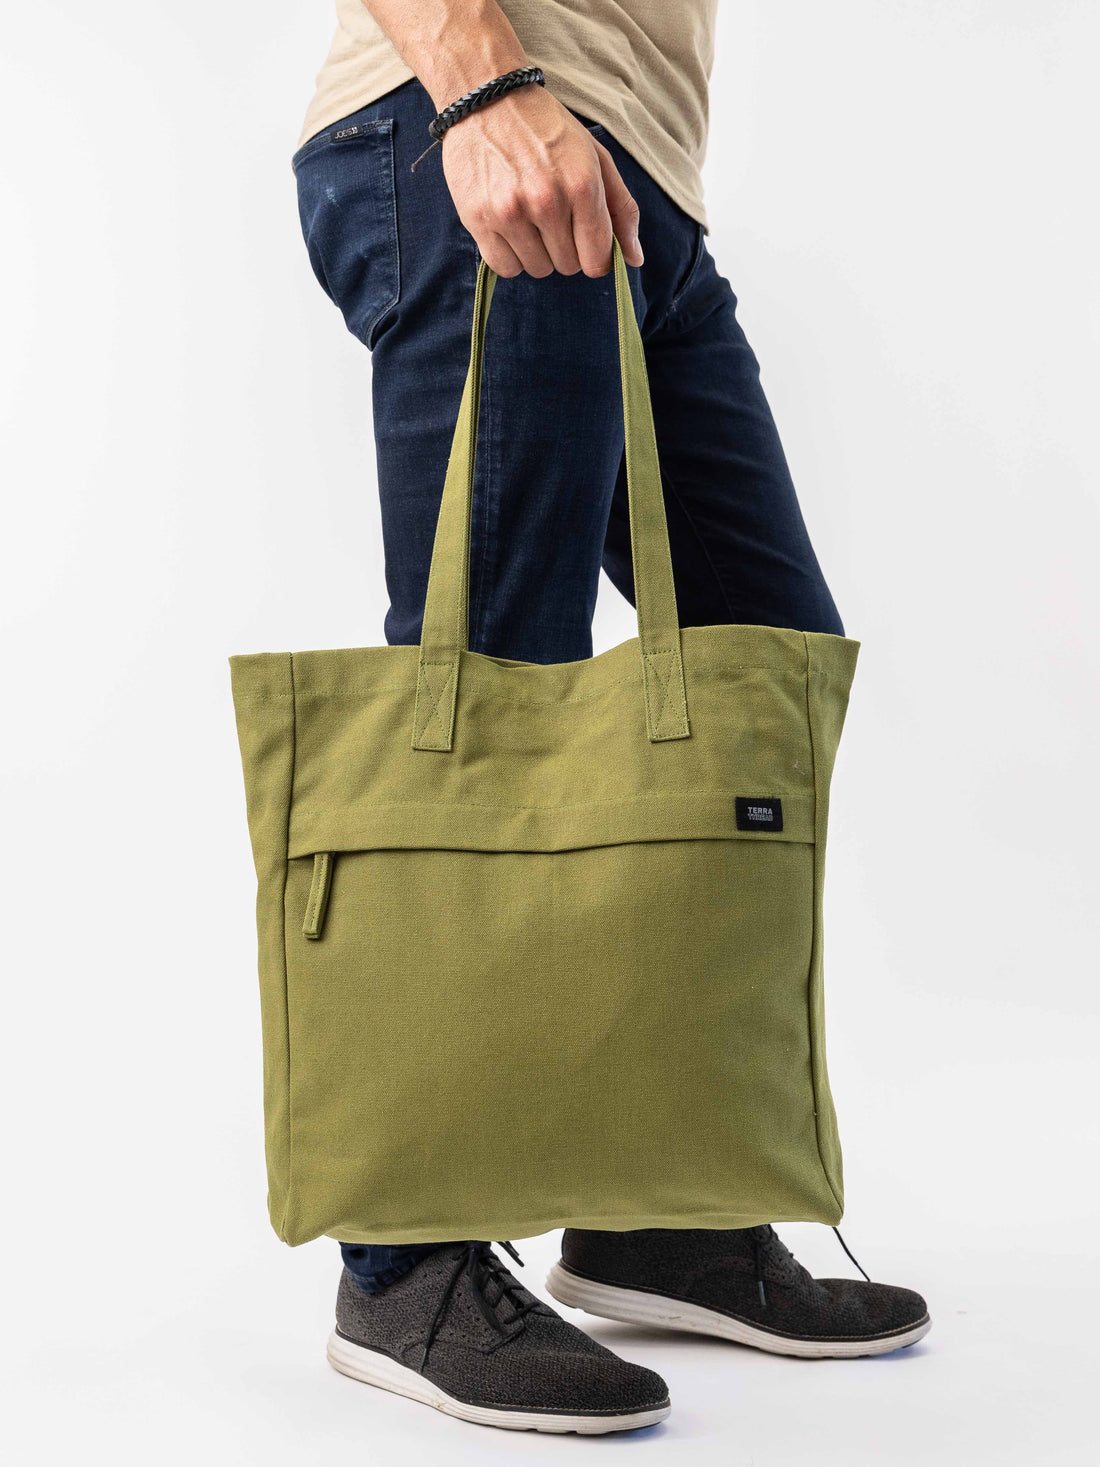 olive green work tote bag